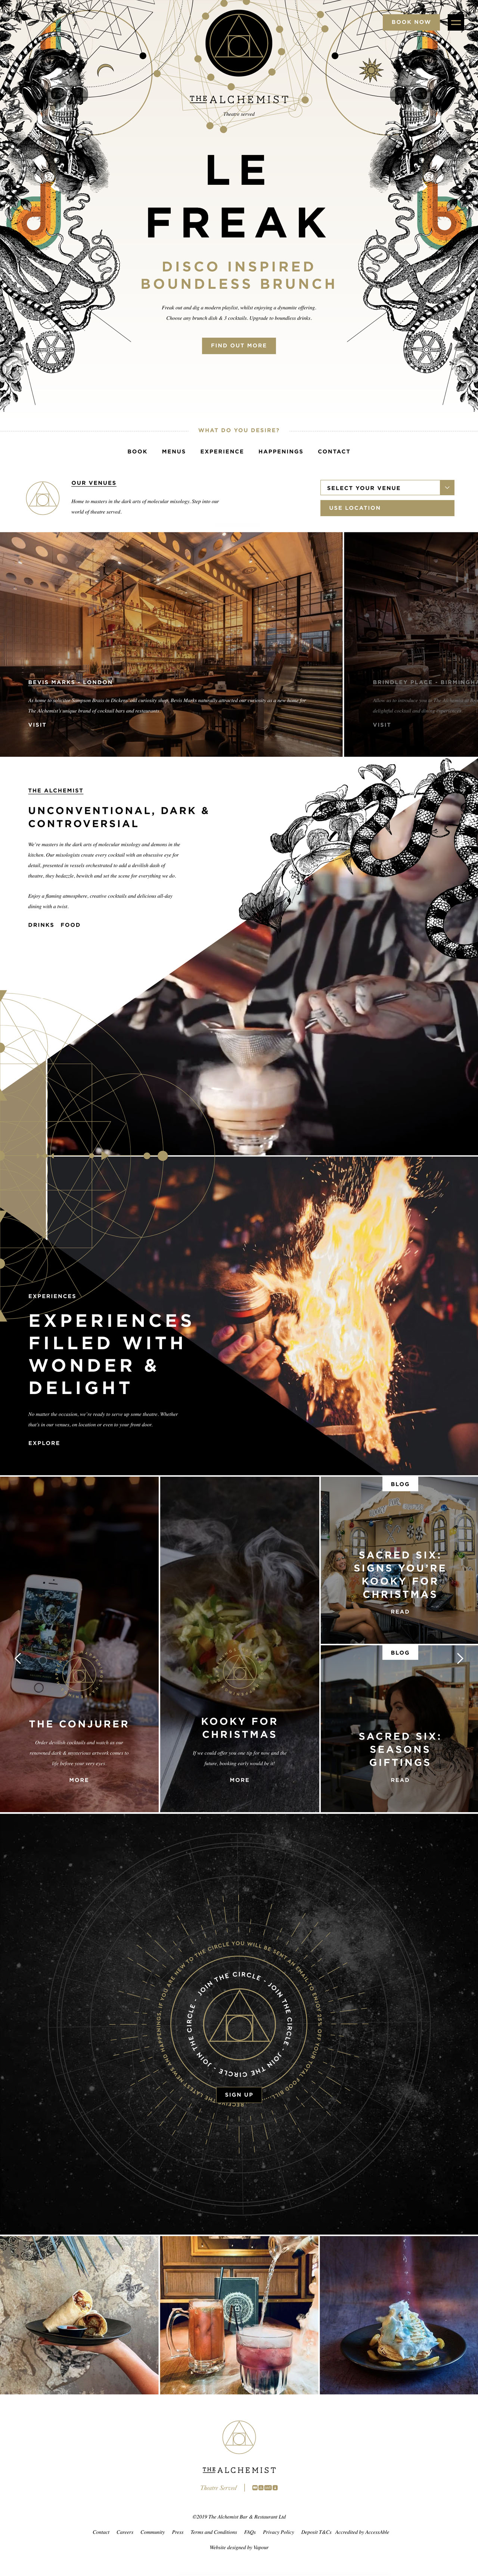 The Alchemist Website Design